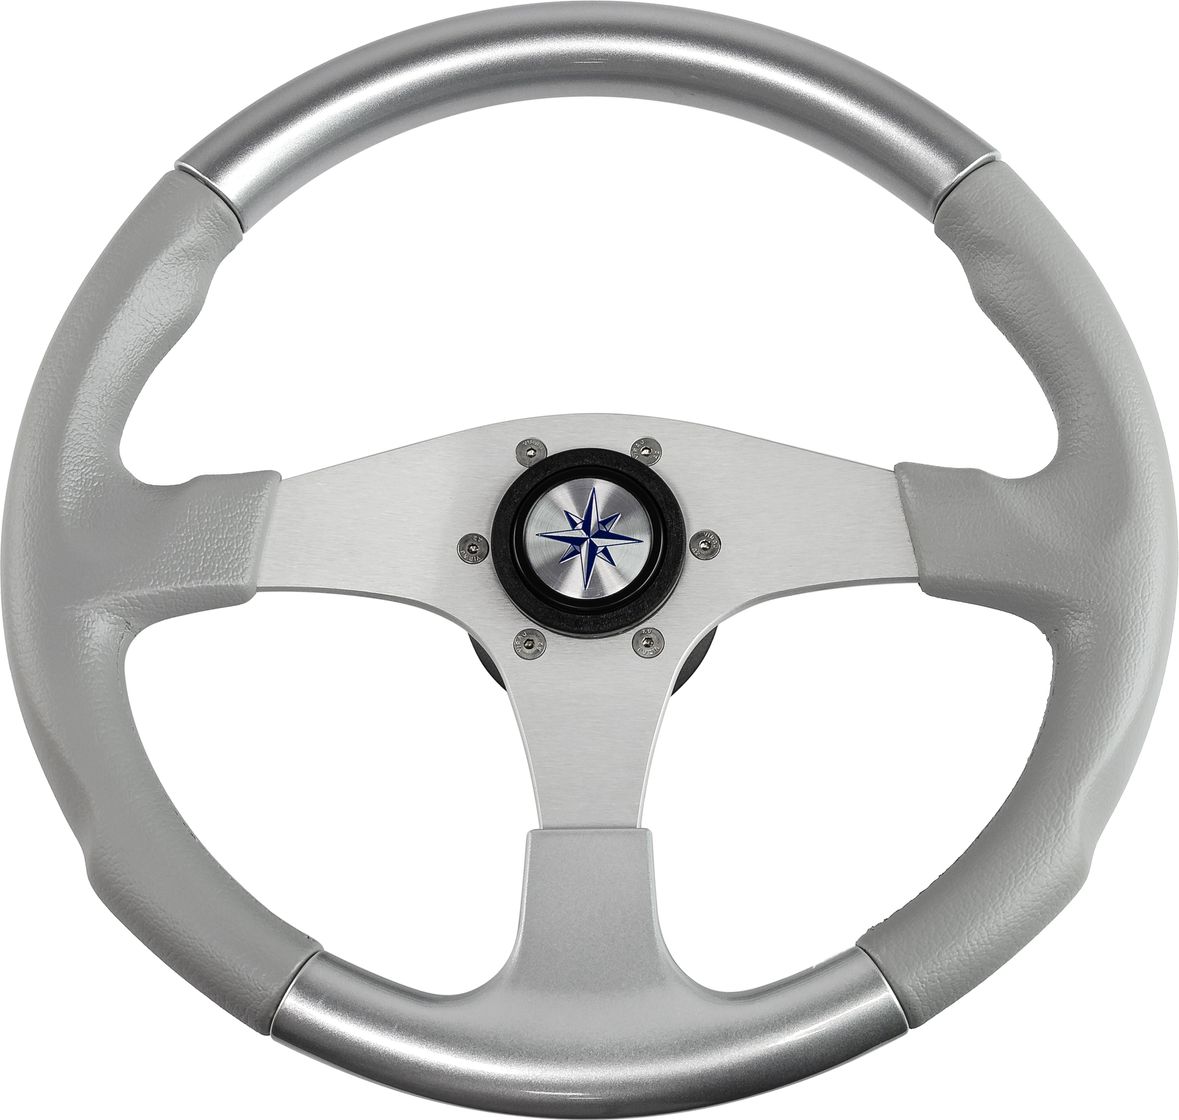 Рулевое колесо EVO MARINE 2 обод серосеребряный, спицы серебряные д. 355 мм VN850003-93 рулевое колесо orion обод спицы серебряные д 355 мм vn960101 01